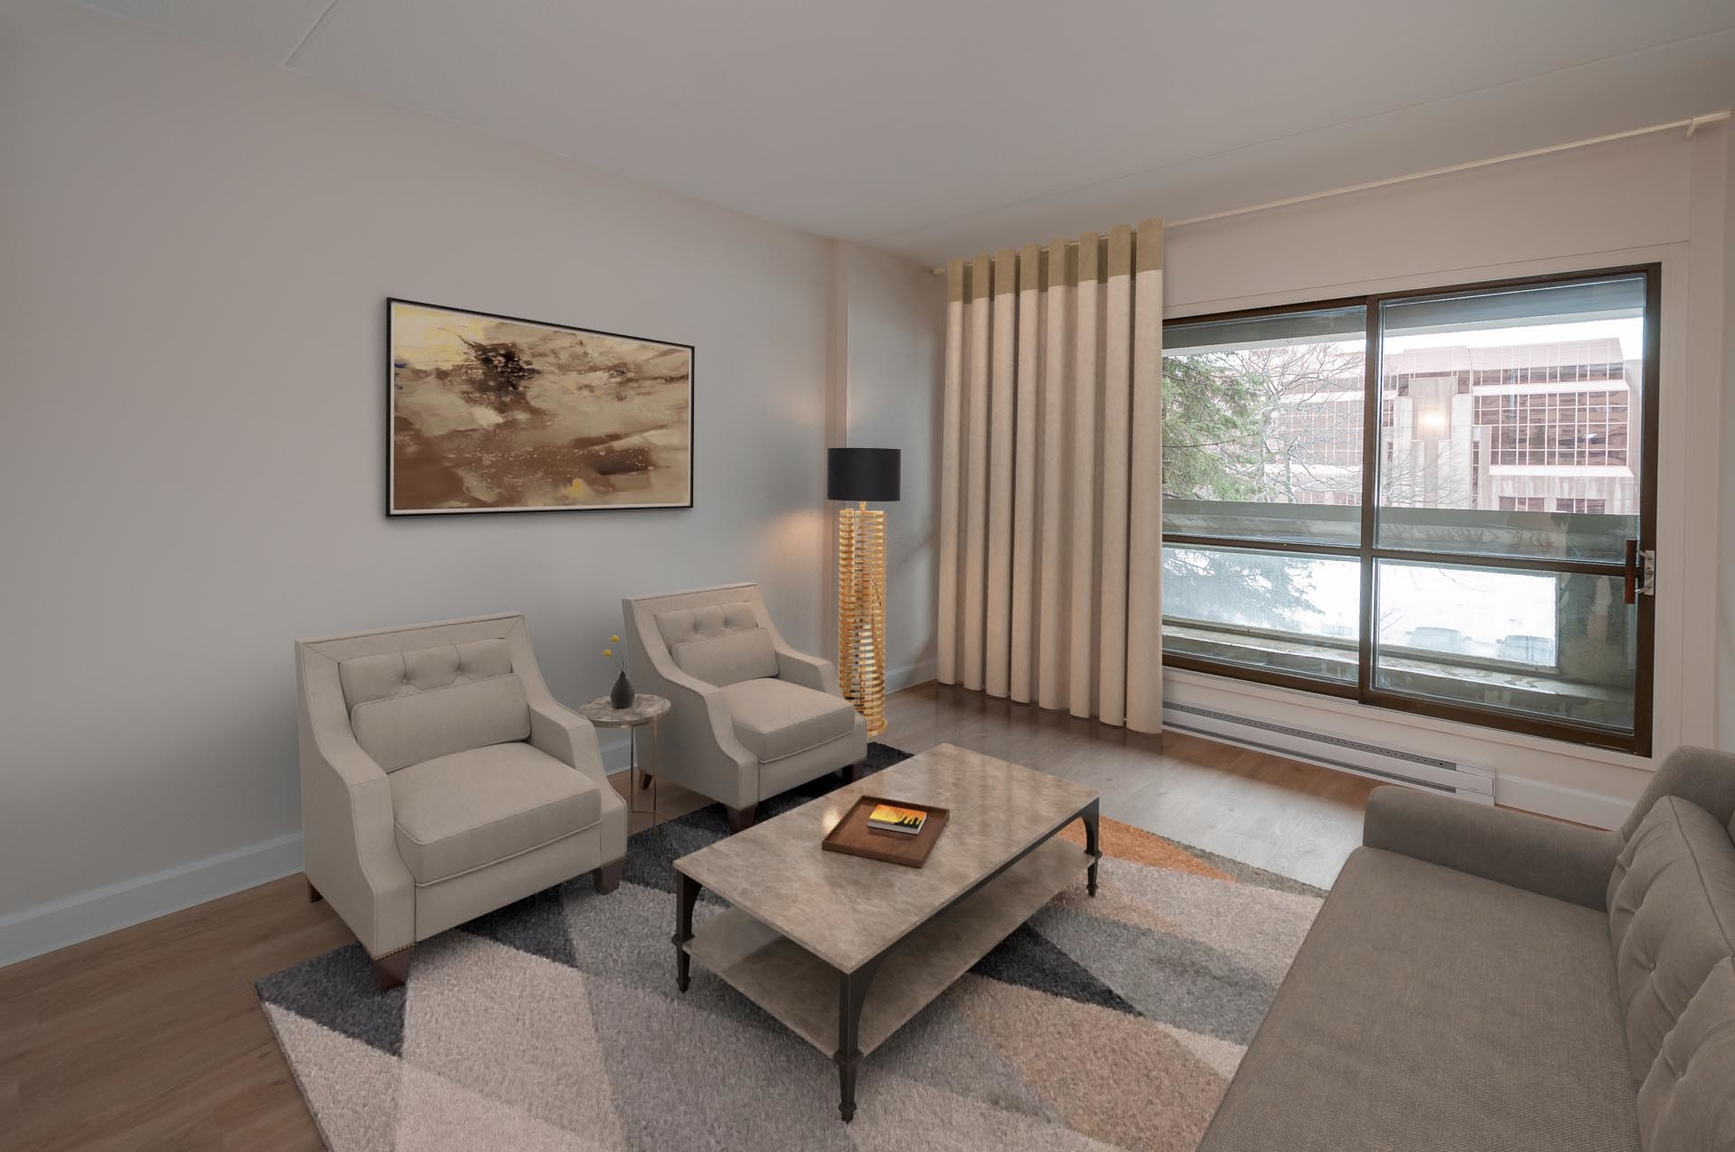 1 bedroom Apartments for rent in Quebec City at Les Jardins de Merici - Photo 16 - RentersPages – L407121